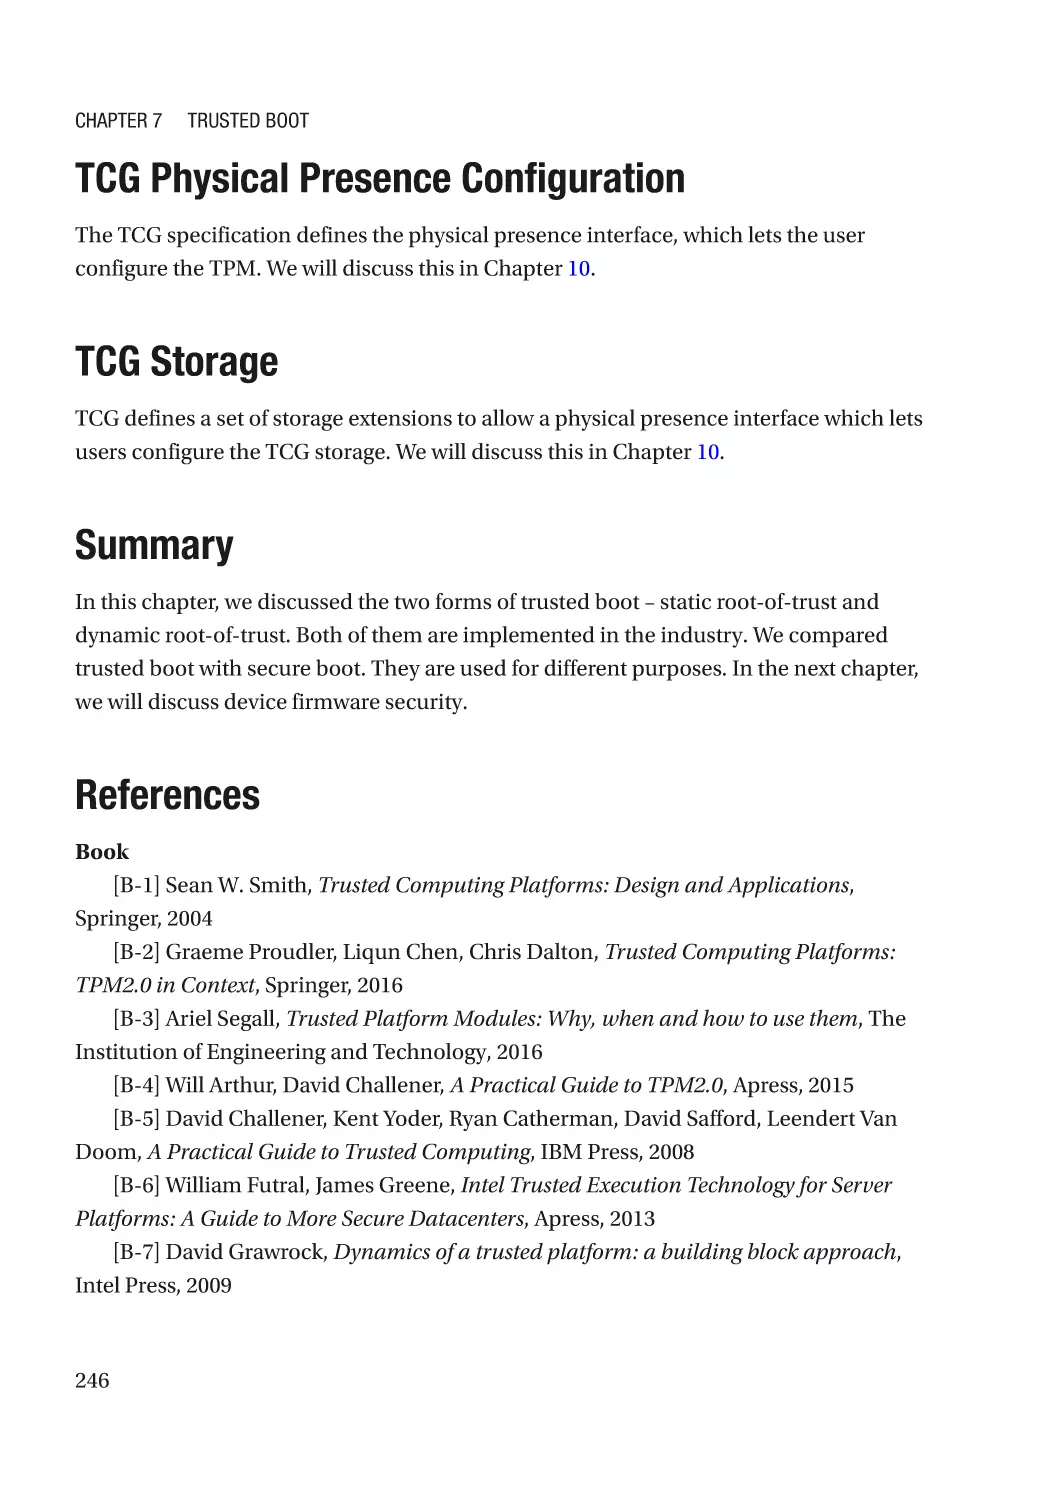 TCG Physical Presence Configuration
TCG Storage
Summary
References